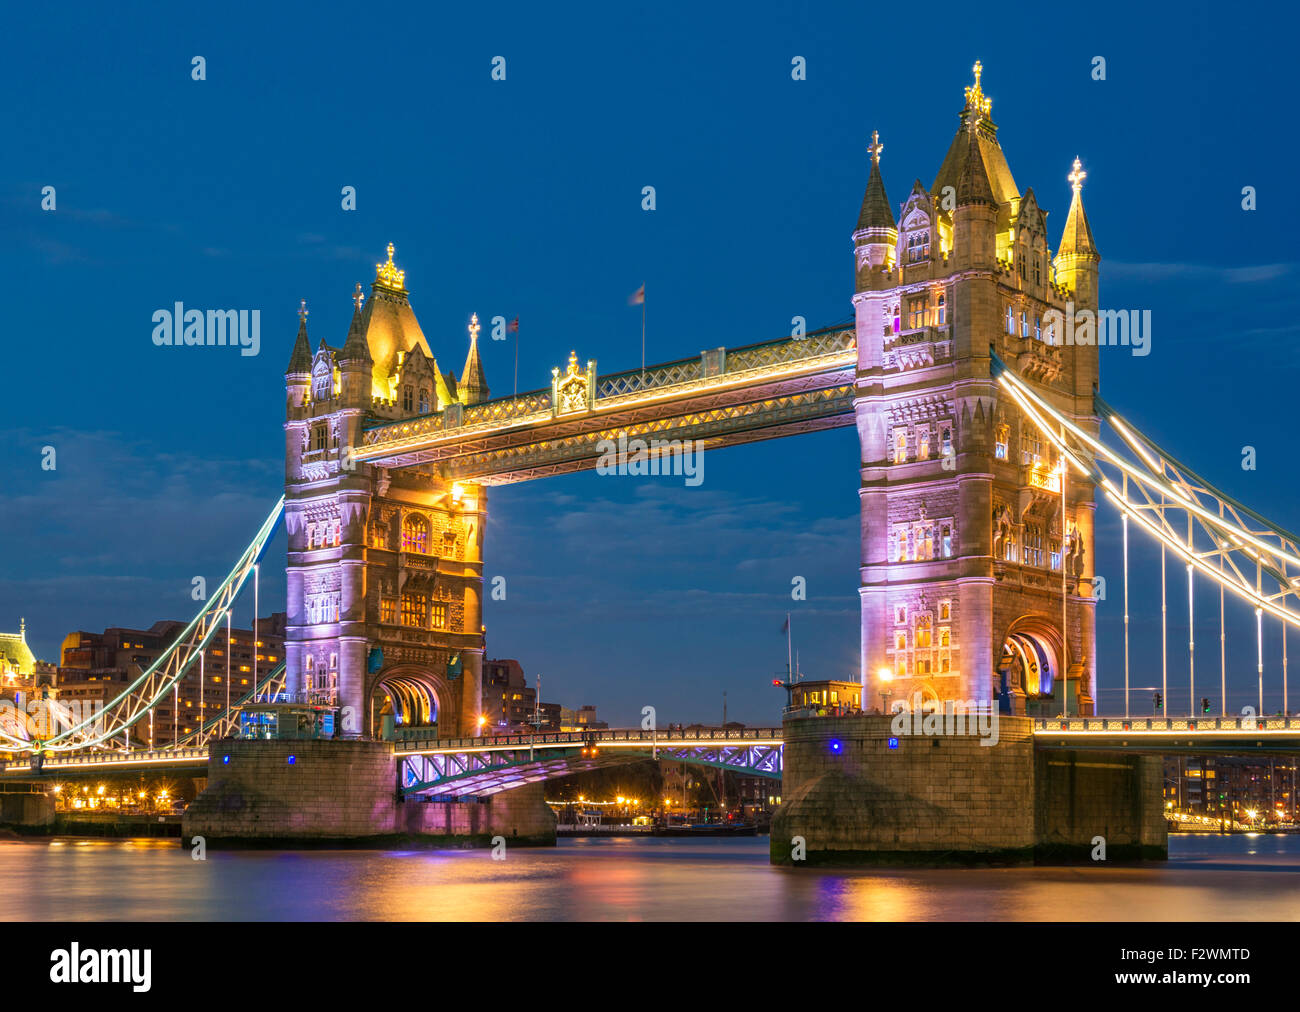 Allume Allume Jusqu Au Tower Bridge De Nuit Et Tamise City De Londres Angleterre Go Uk Eu Europe Photo Stock Alamy